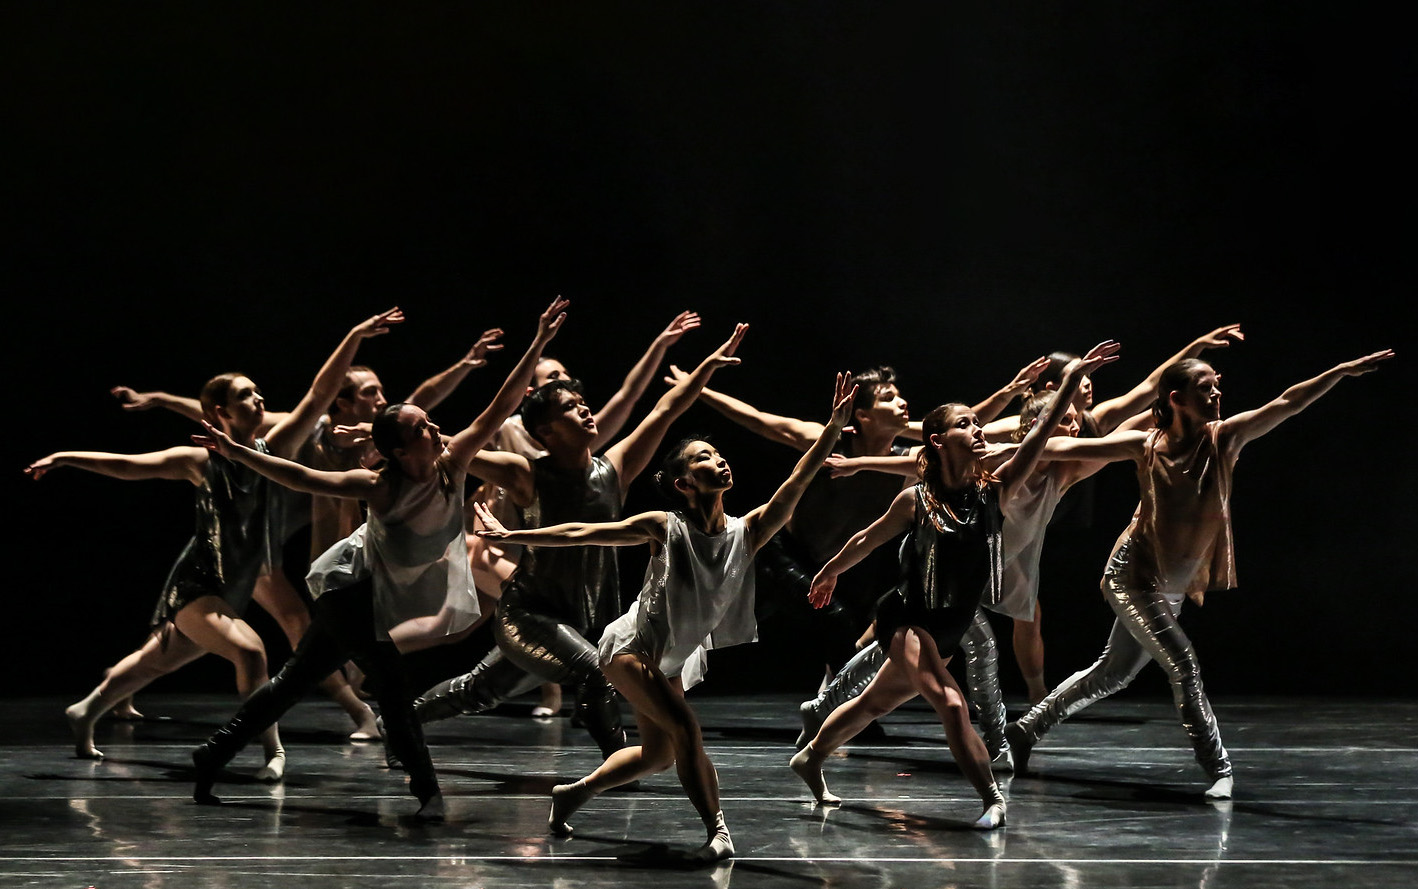 Backhausdance in "Scene Unseen" choreography by Jennifer Backhaus - Photo by Shawna Sarnowski